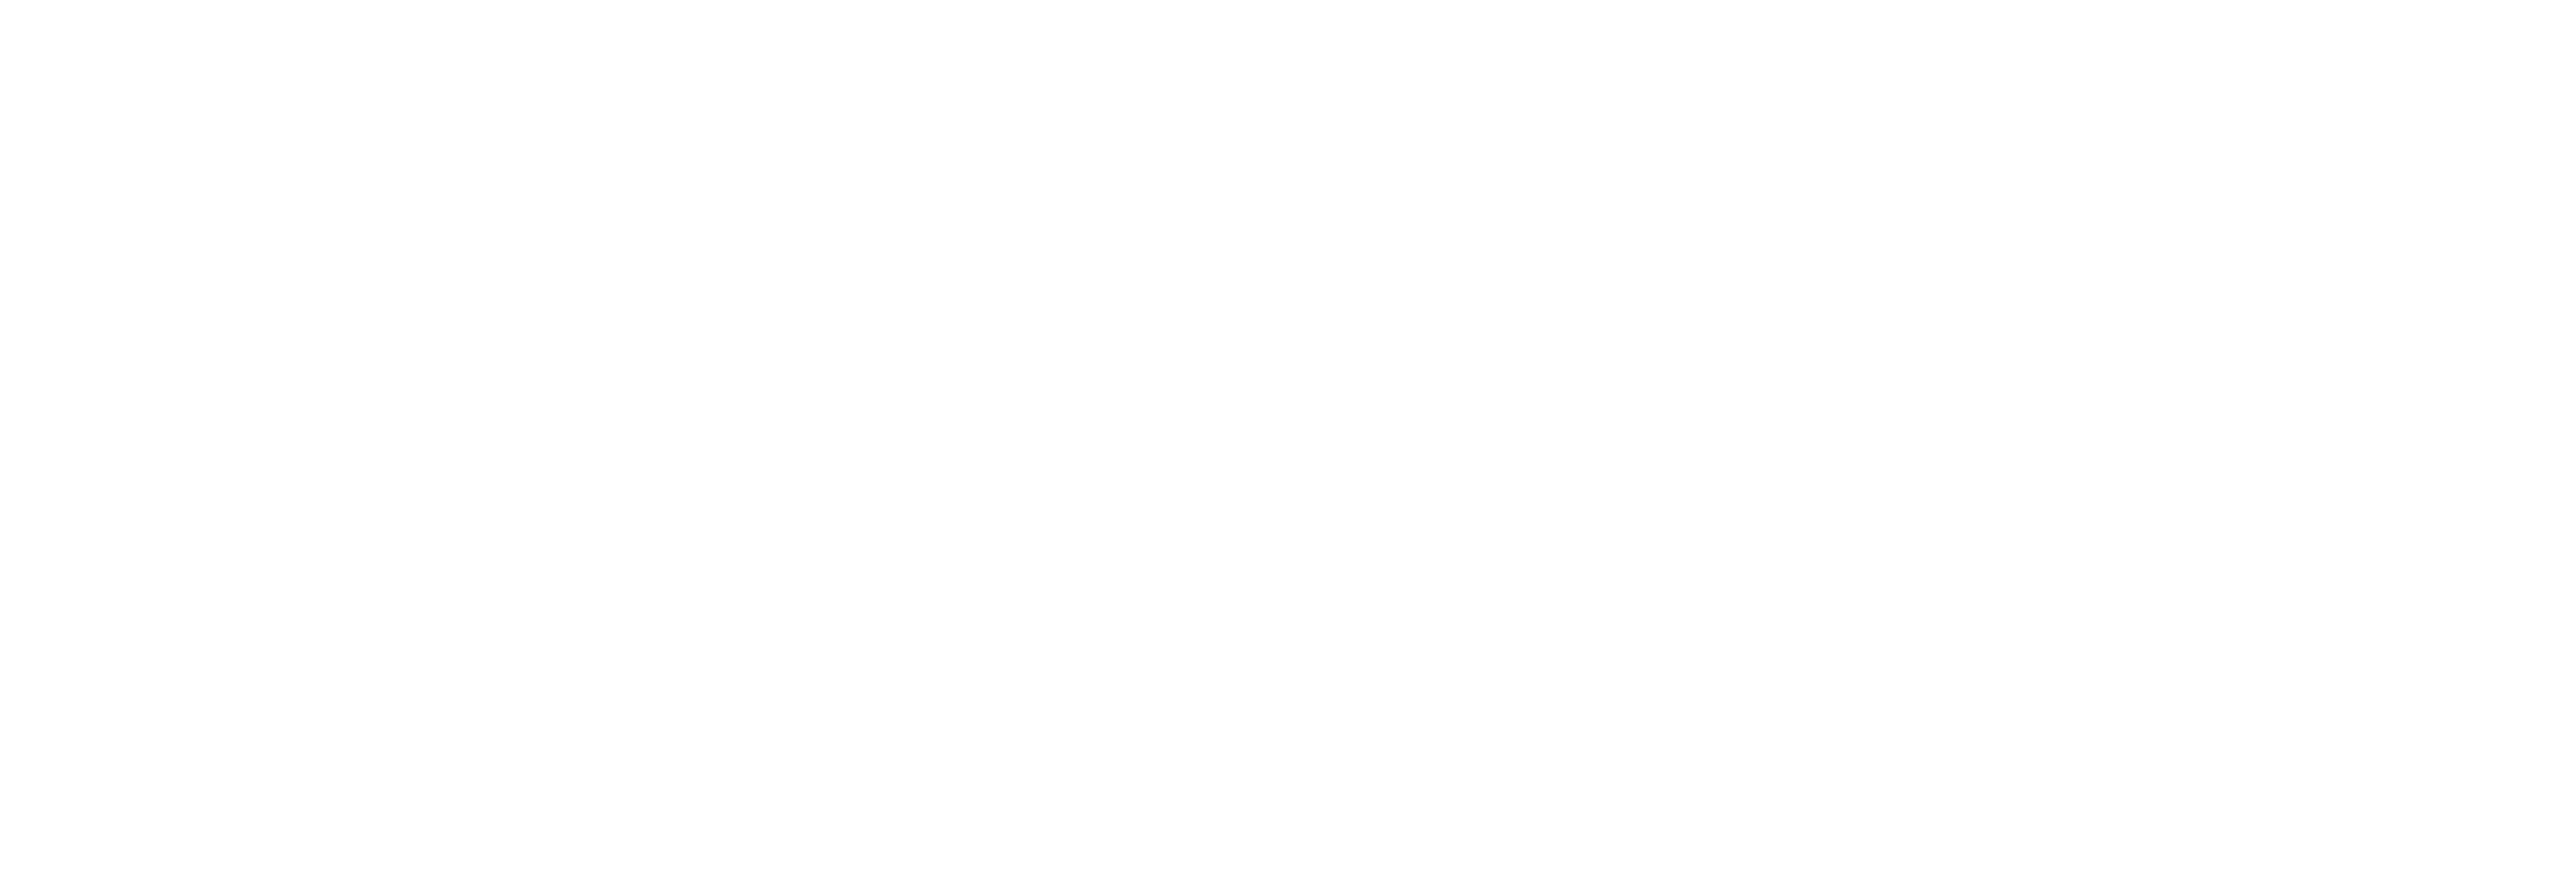 Shopping_BOOSTER-logo